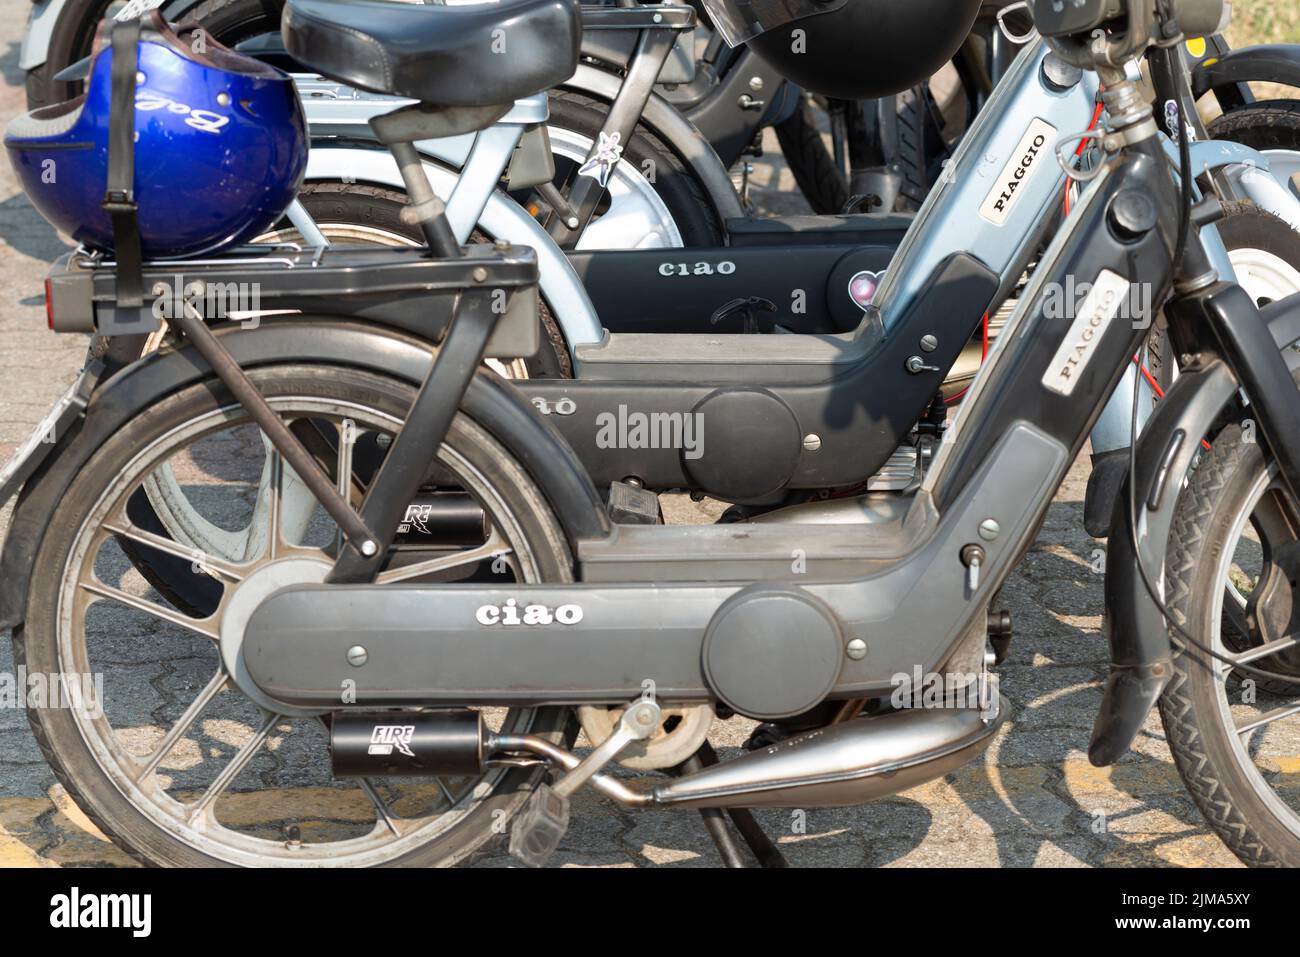 Italia, Lombardía, Reunión de motos antiguas, Piaggio Ciao Moped Foto de stock